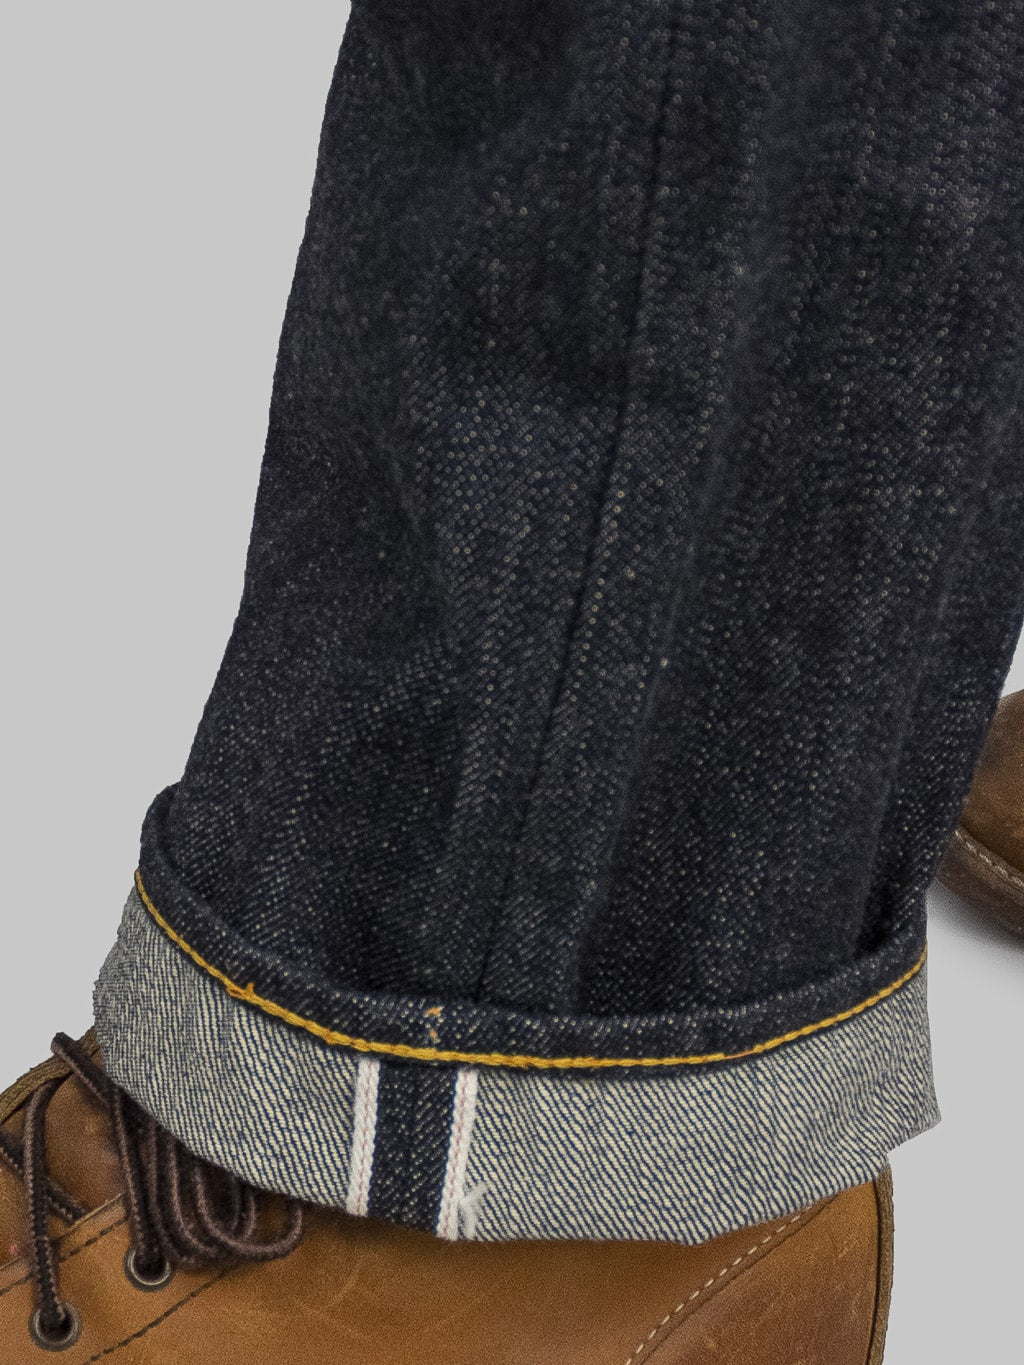 The Flat Head 3004 Regular Straight Jeans selvedge